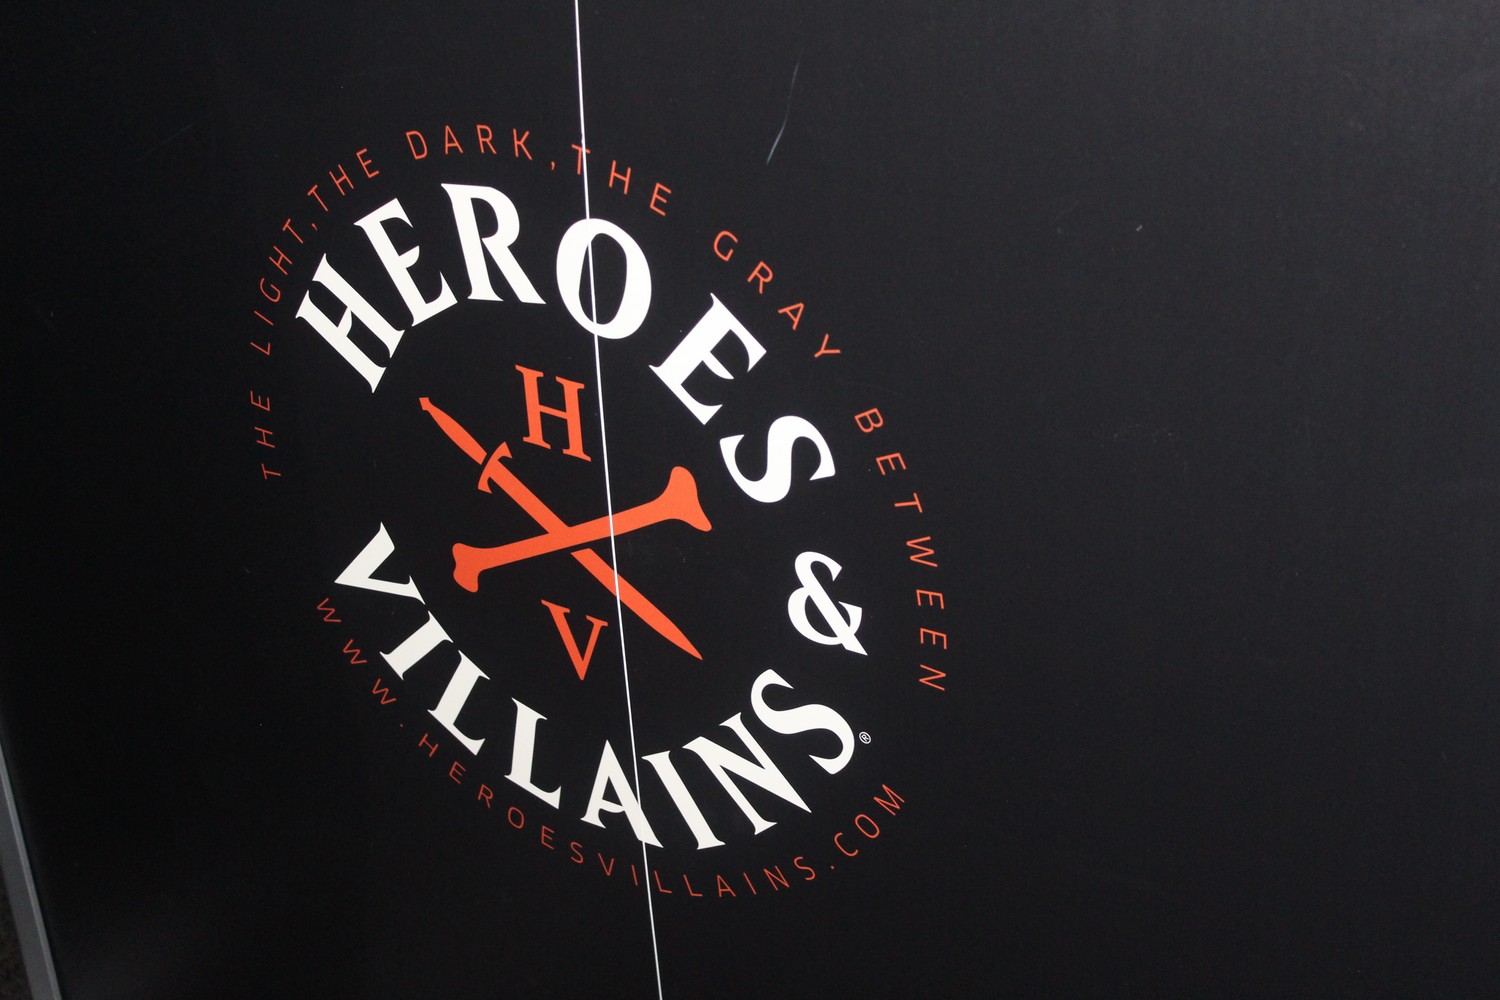 heroes-and-villains-005.jpg